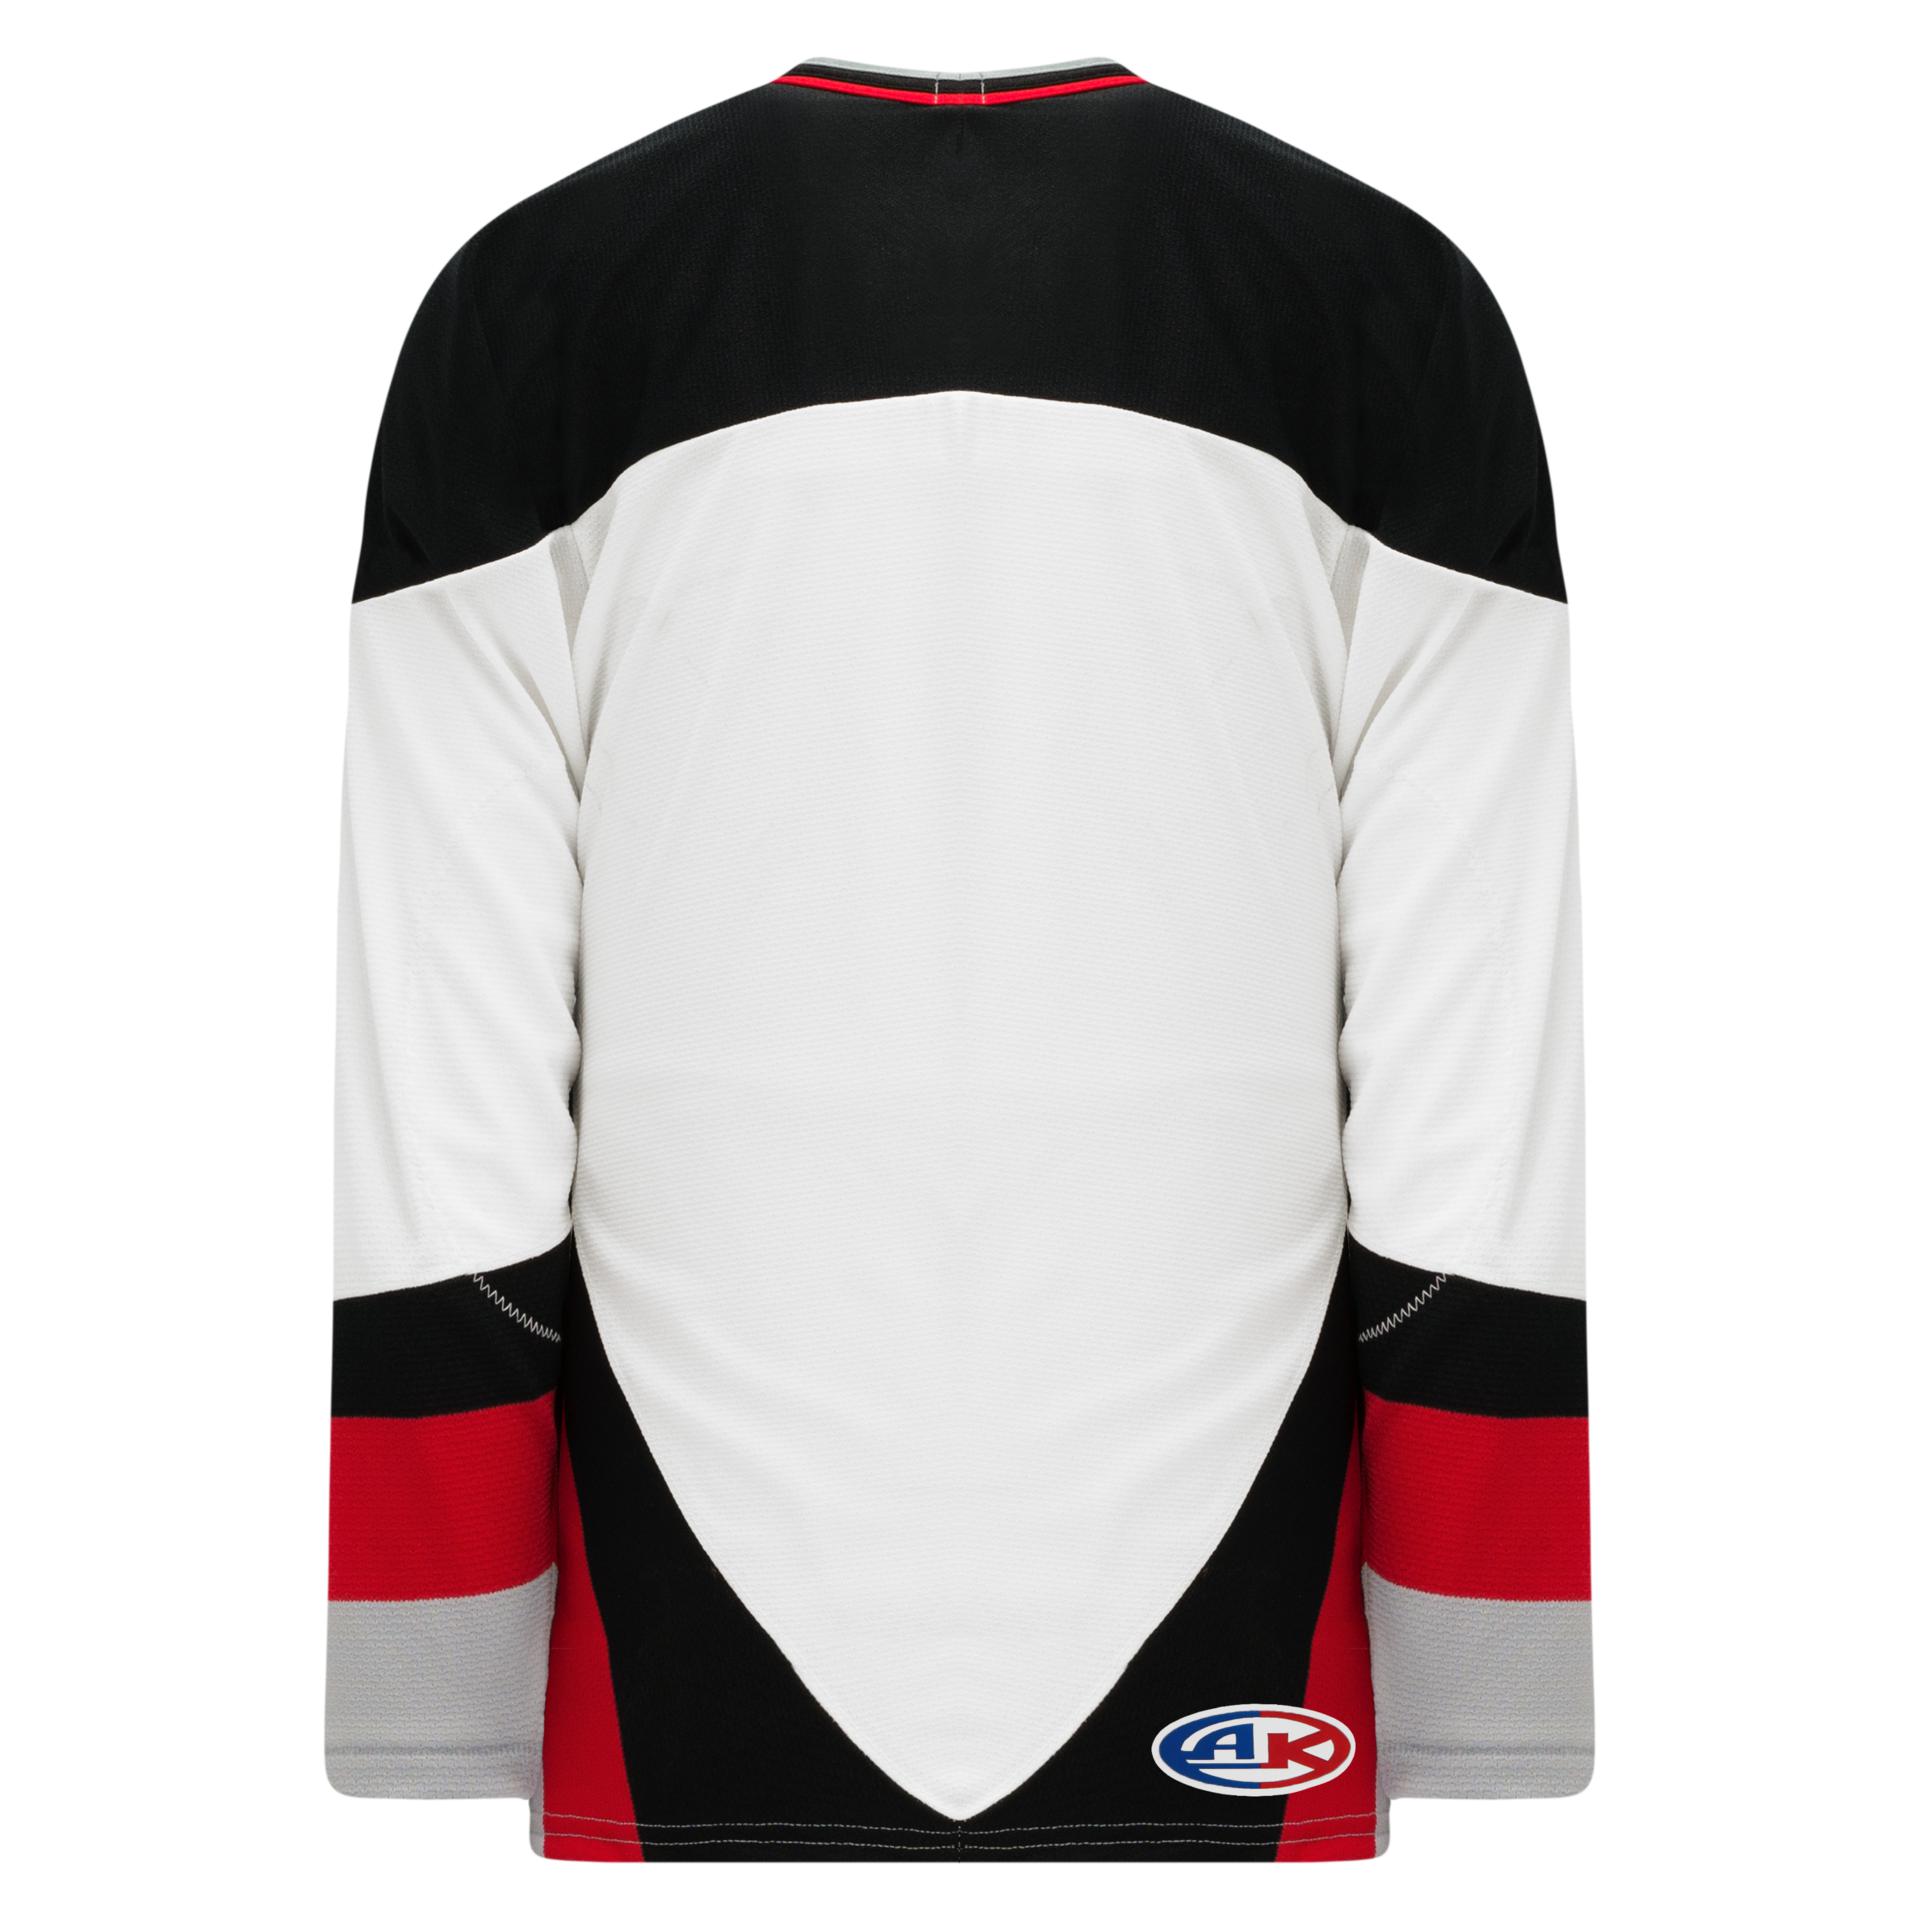 Vintage Buffalo Sabers Hockey Jersey NHL Stitched Sweater by 